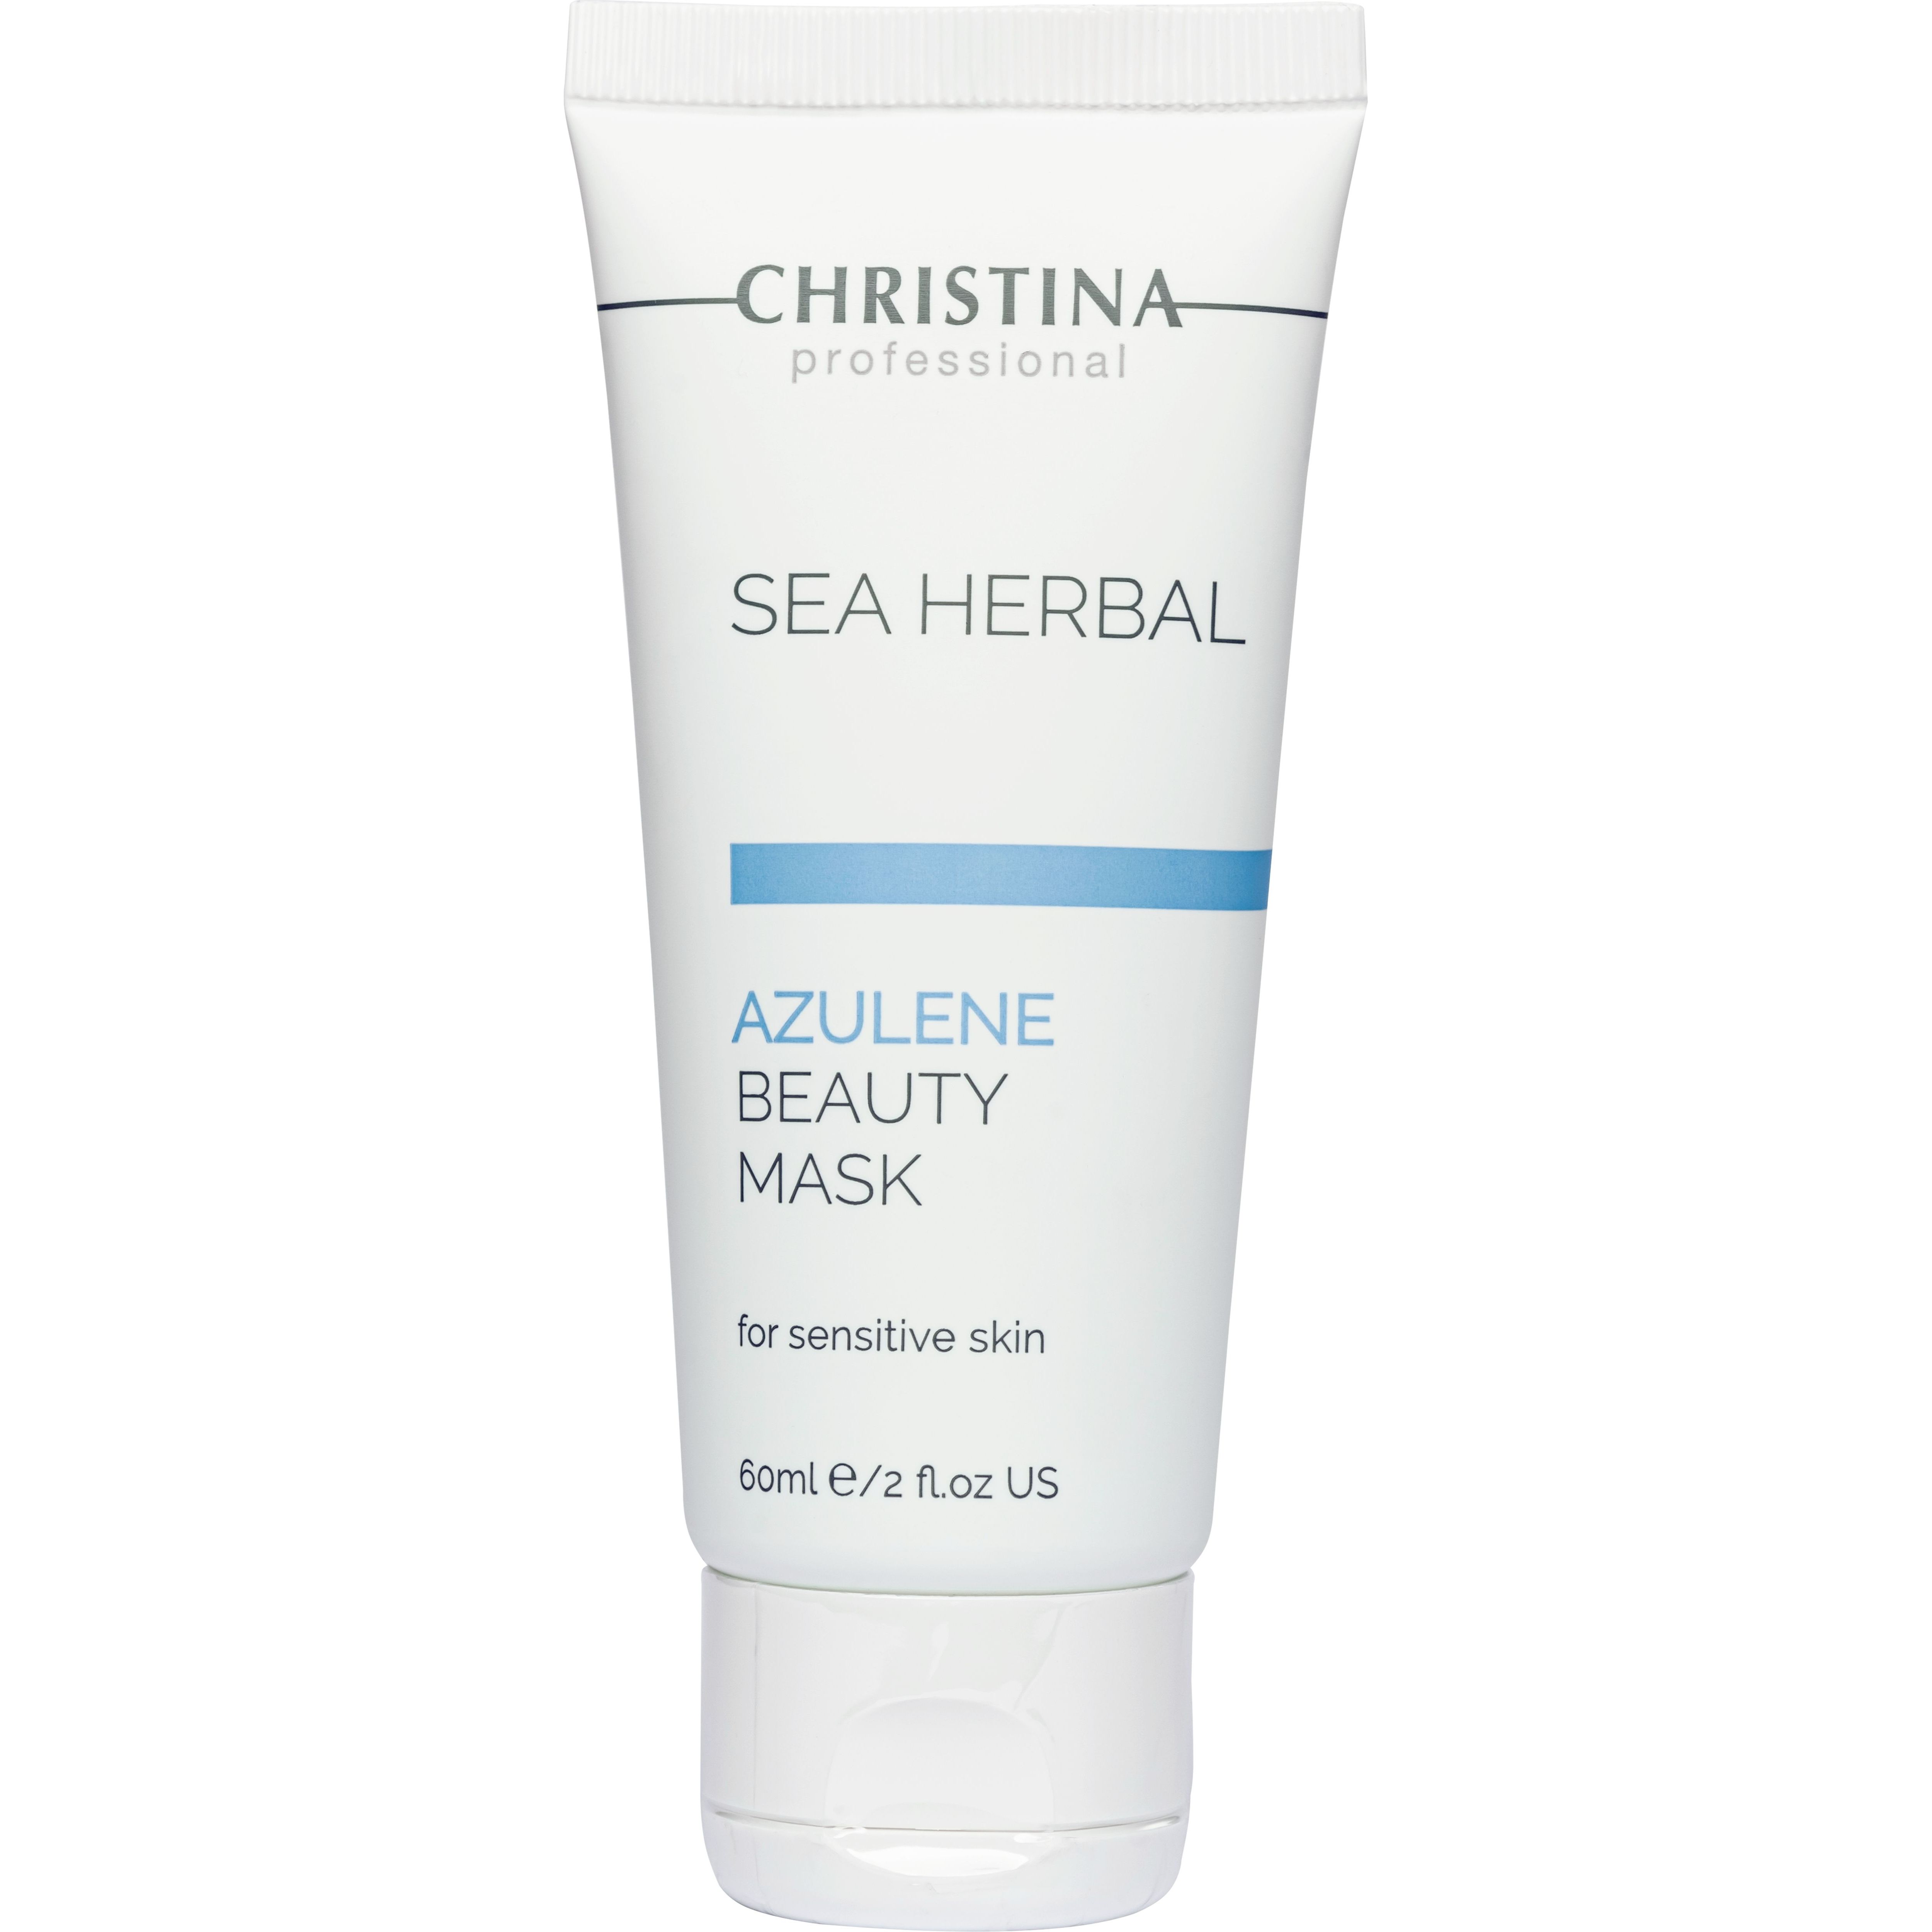 Азуленова маска краси для чутливої шкіри Christina Sea Herbal Beauty Mask Azulene For Sensitive Skin, 60 мл - фото 1